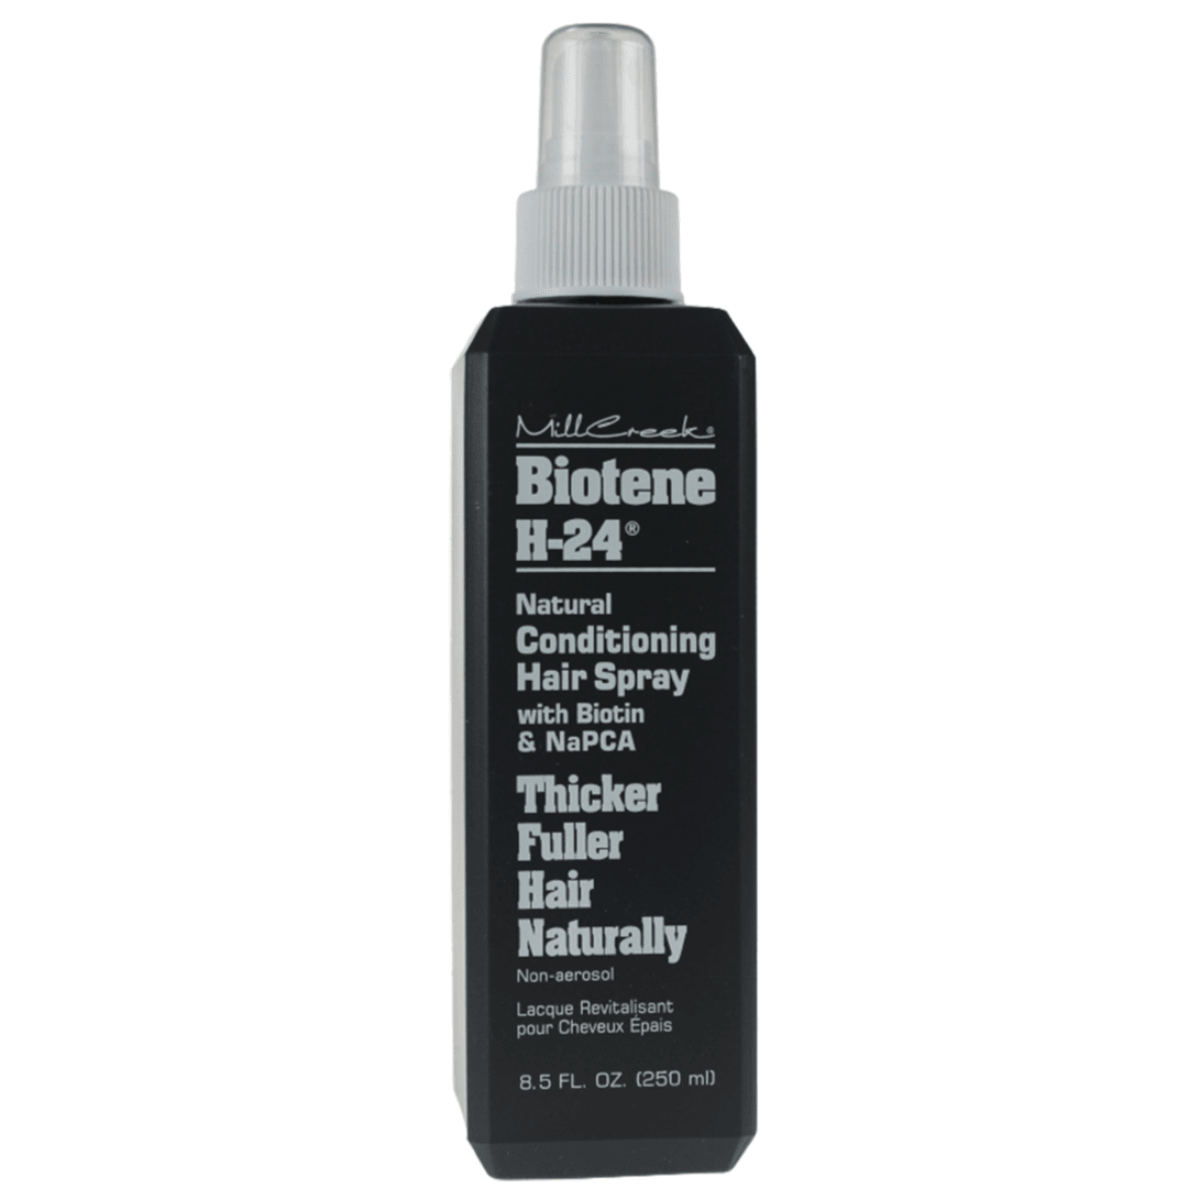 MillCreek Biotene H-24 Conditioning Hair Spray 250mL Hair Care at Village Vitamin Store